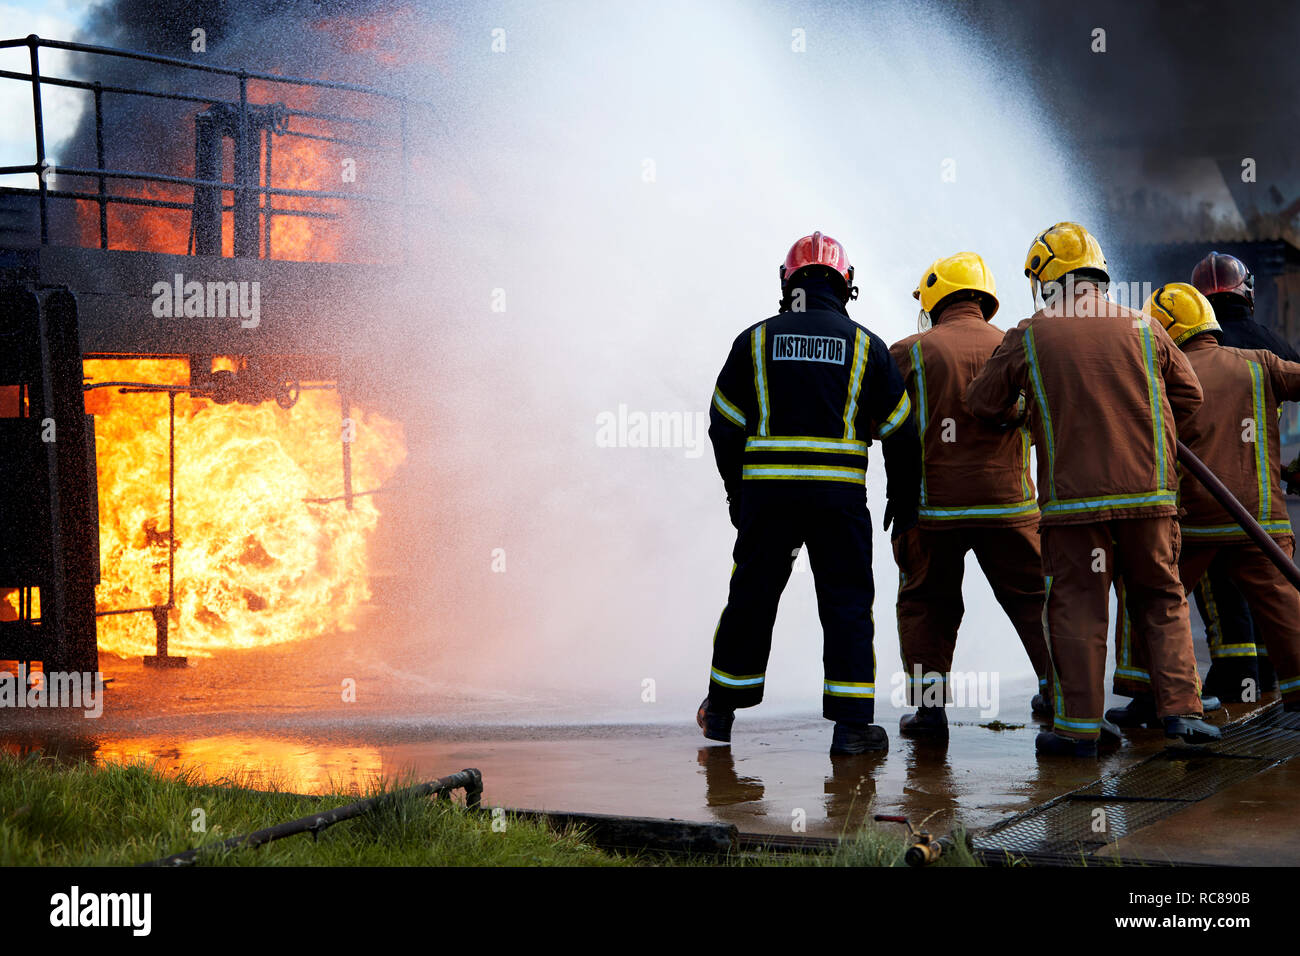 Firemen training to put out fire on burning building, Darlington, UK Stock Photo